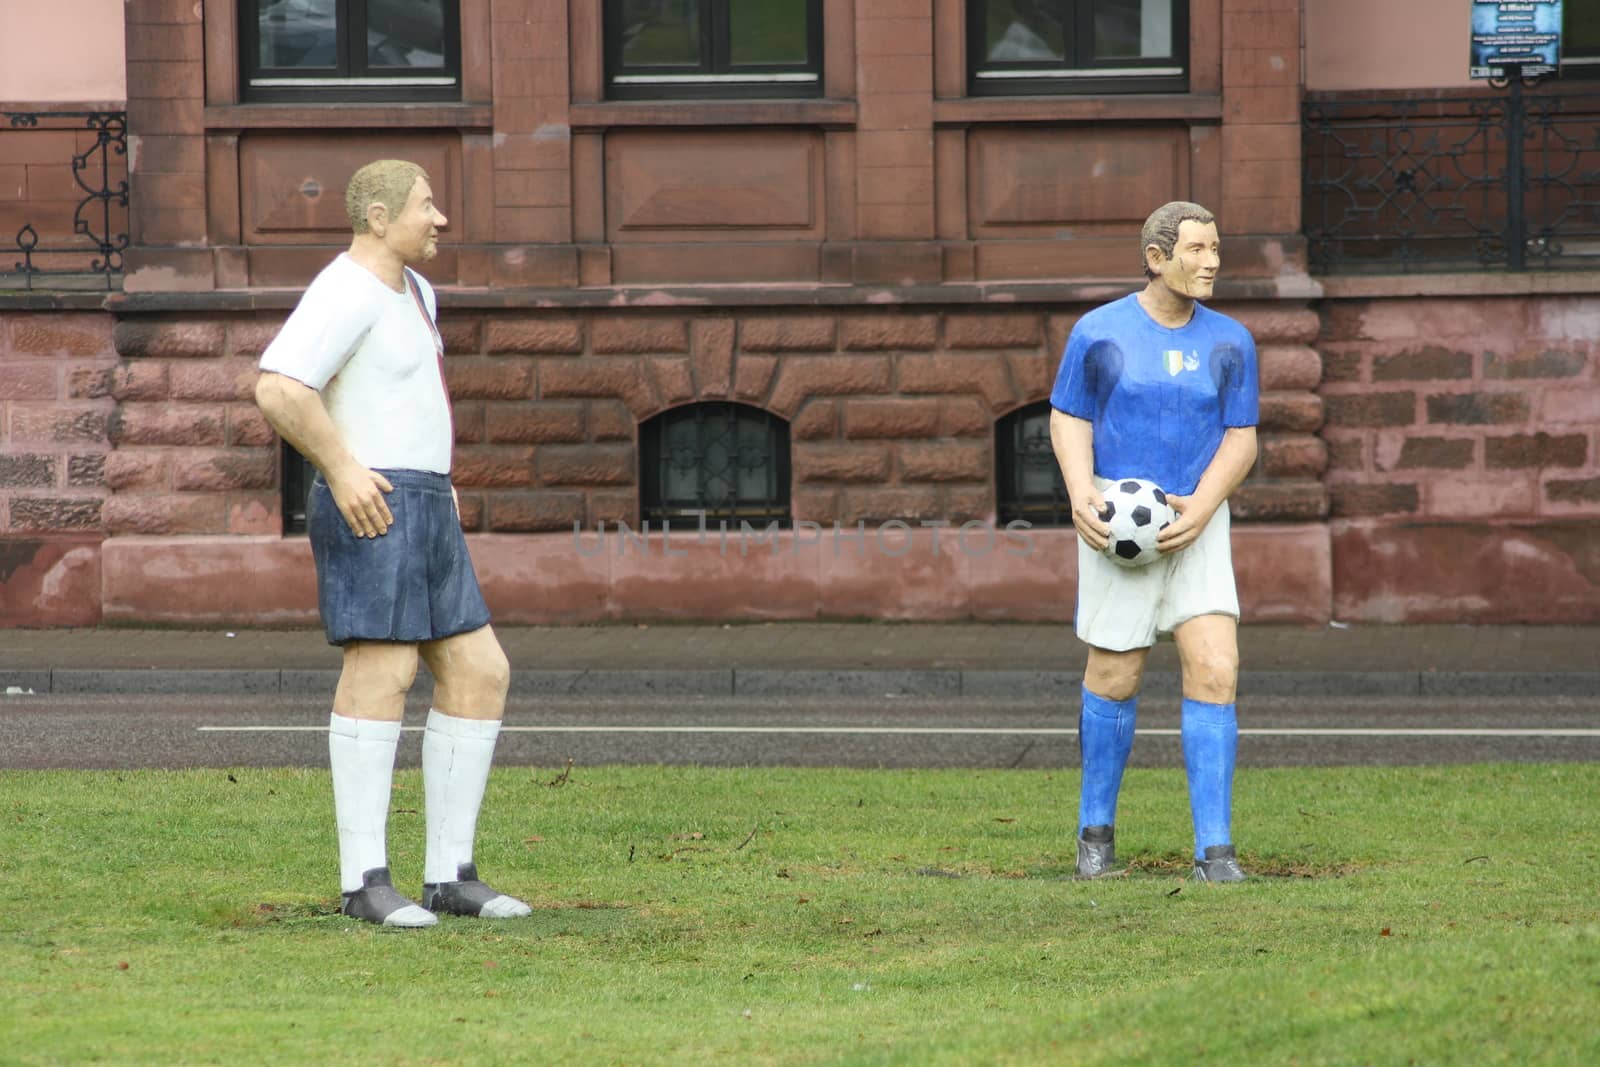 two life sized soccer figures with ball     zwei lebensgrosse Fu�baller-Figuren, mit Ball by hadot